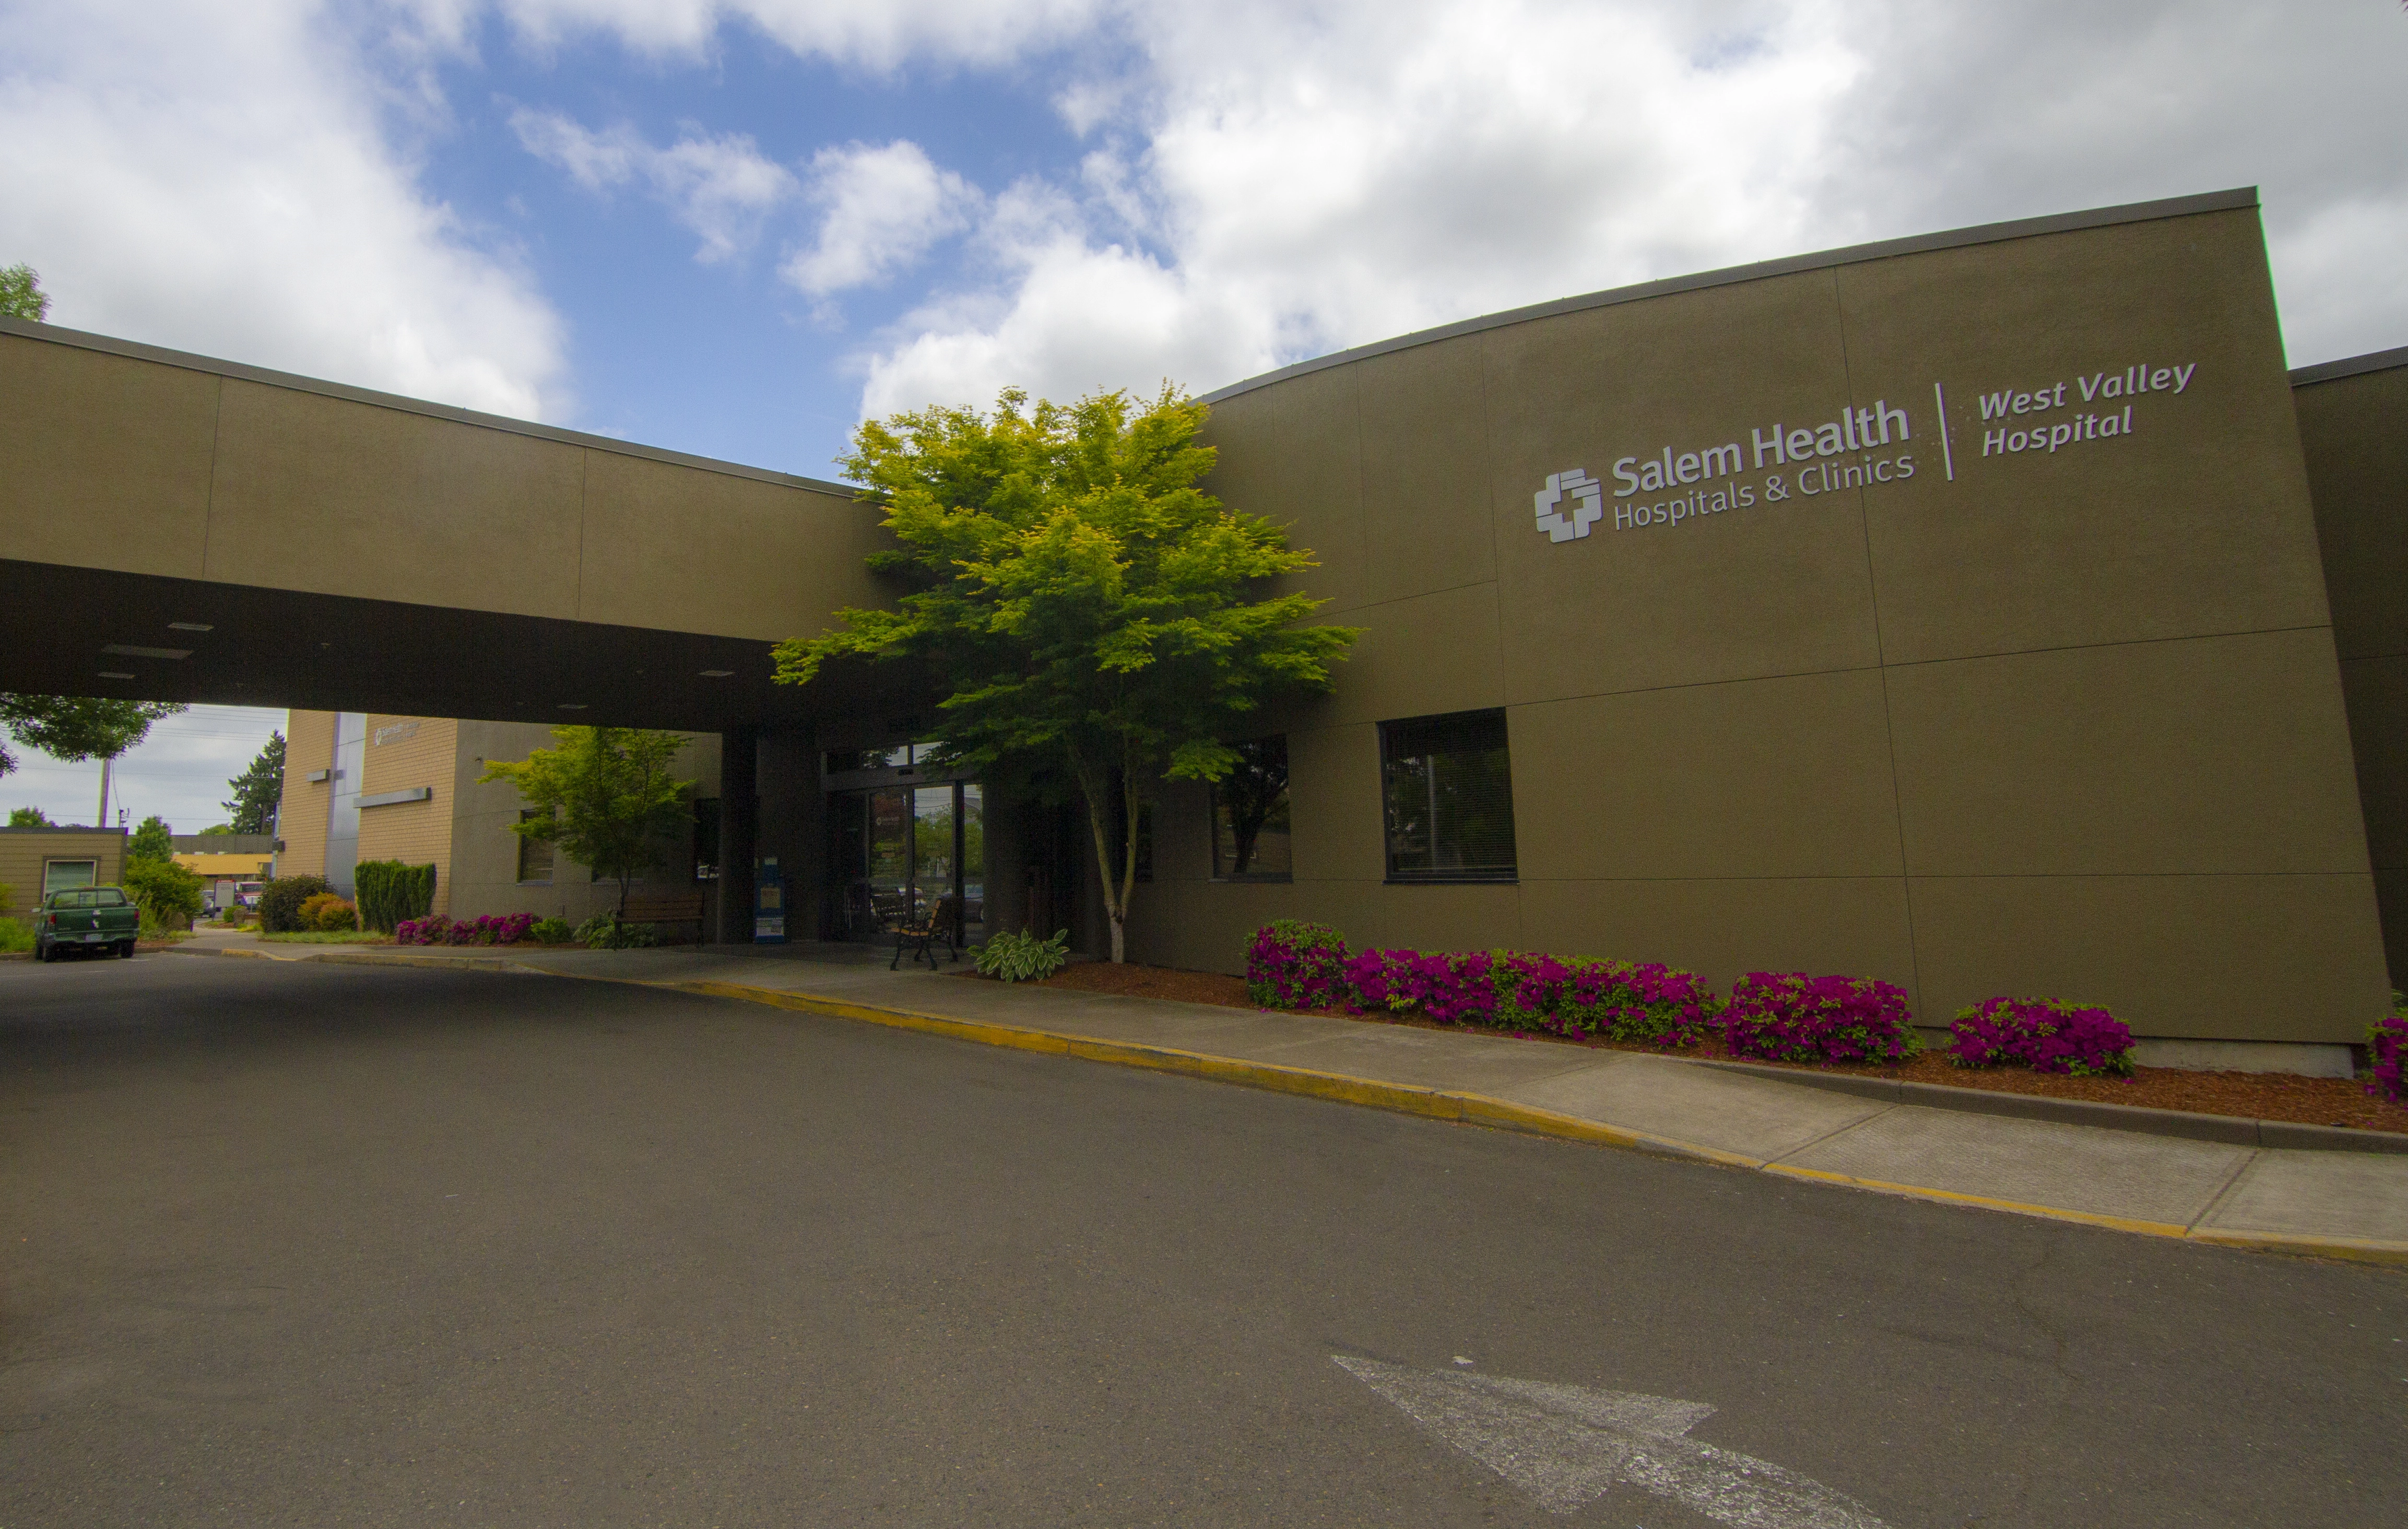 Entrance to Salem Health West Valley Hospital